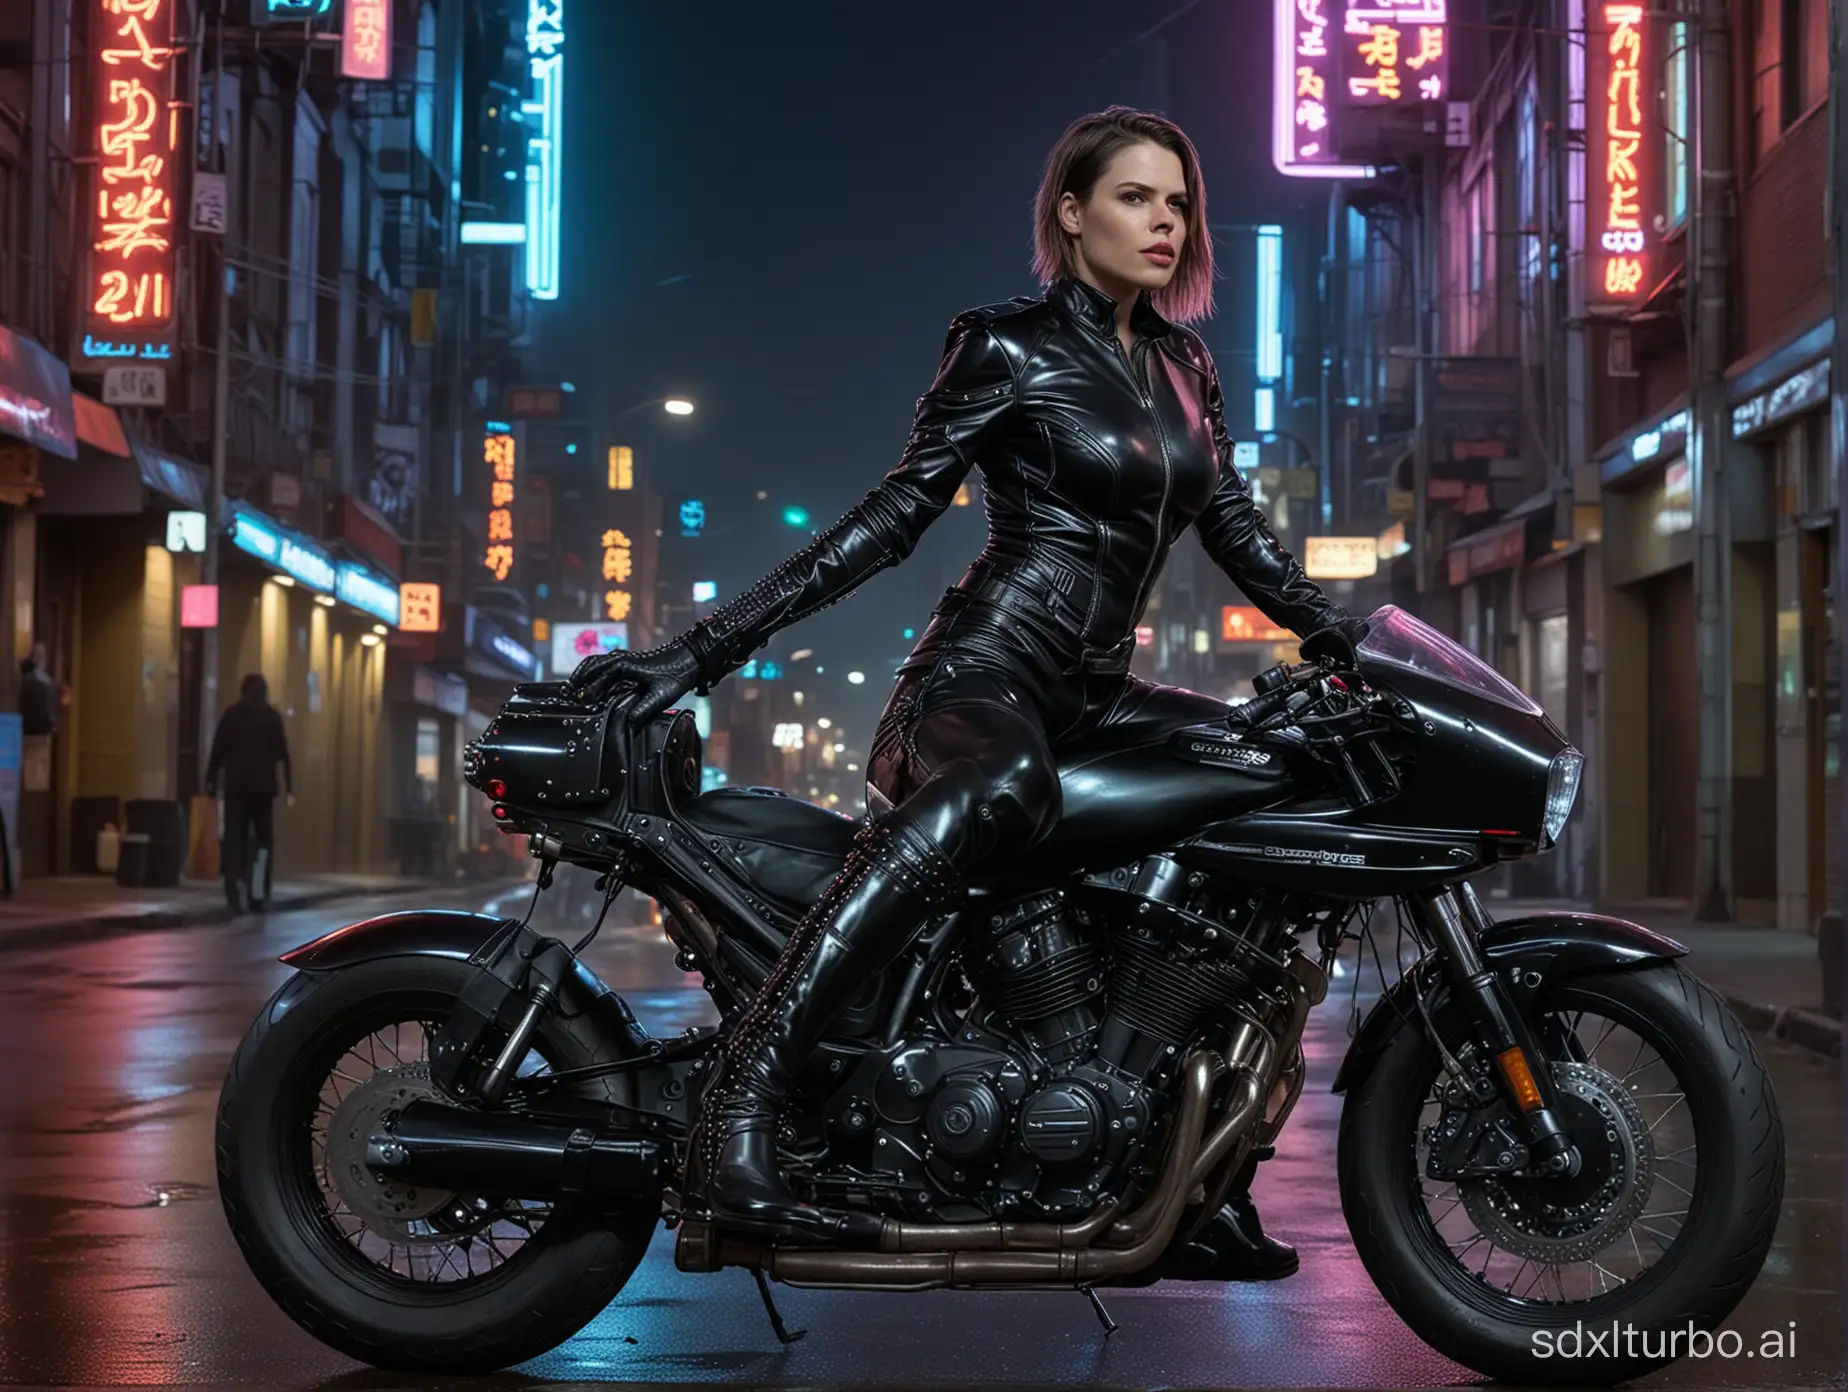 Cyberpunk-Police-Woman-Clea-Duvall-Riding-Motorbike-in-Neon-Cityscape